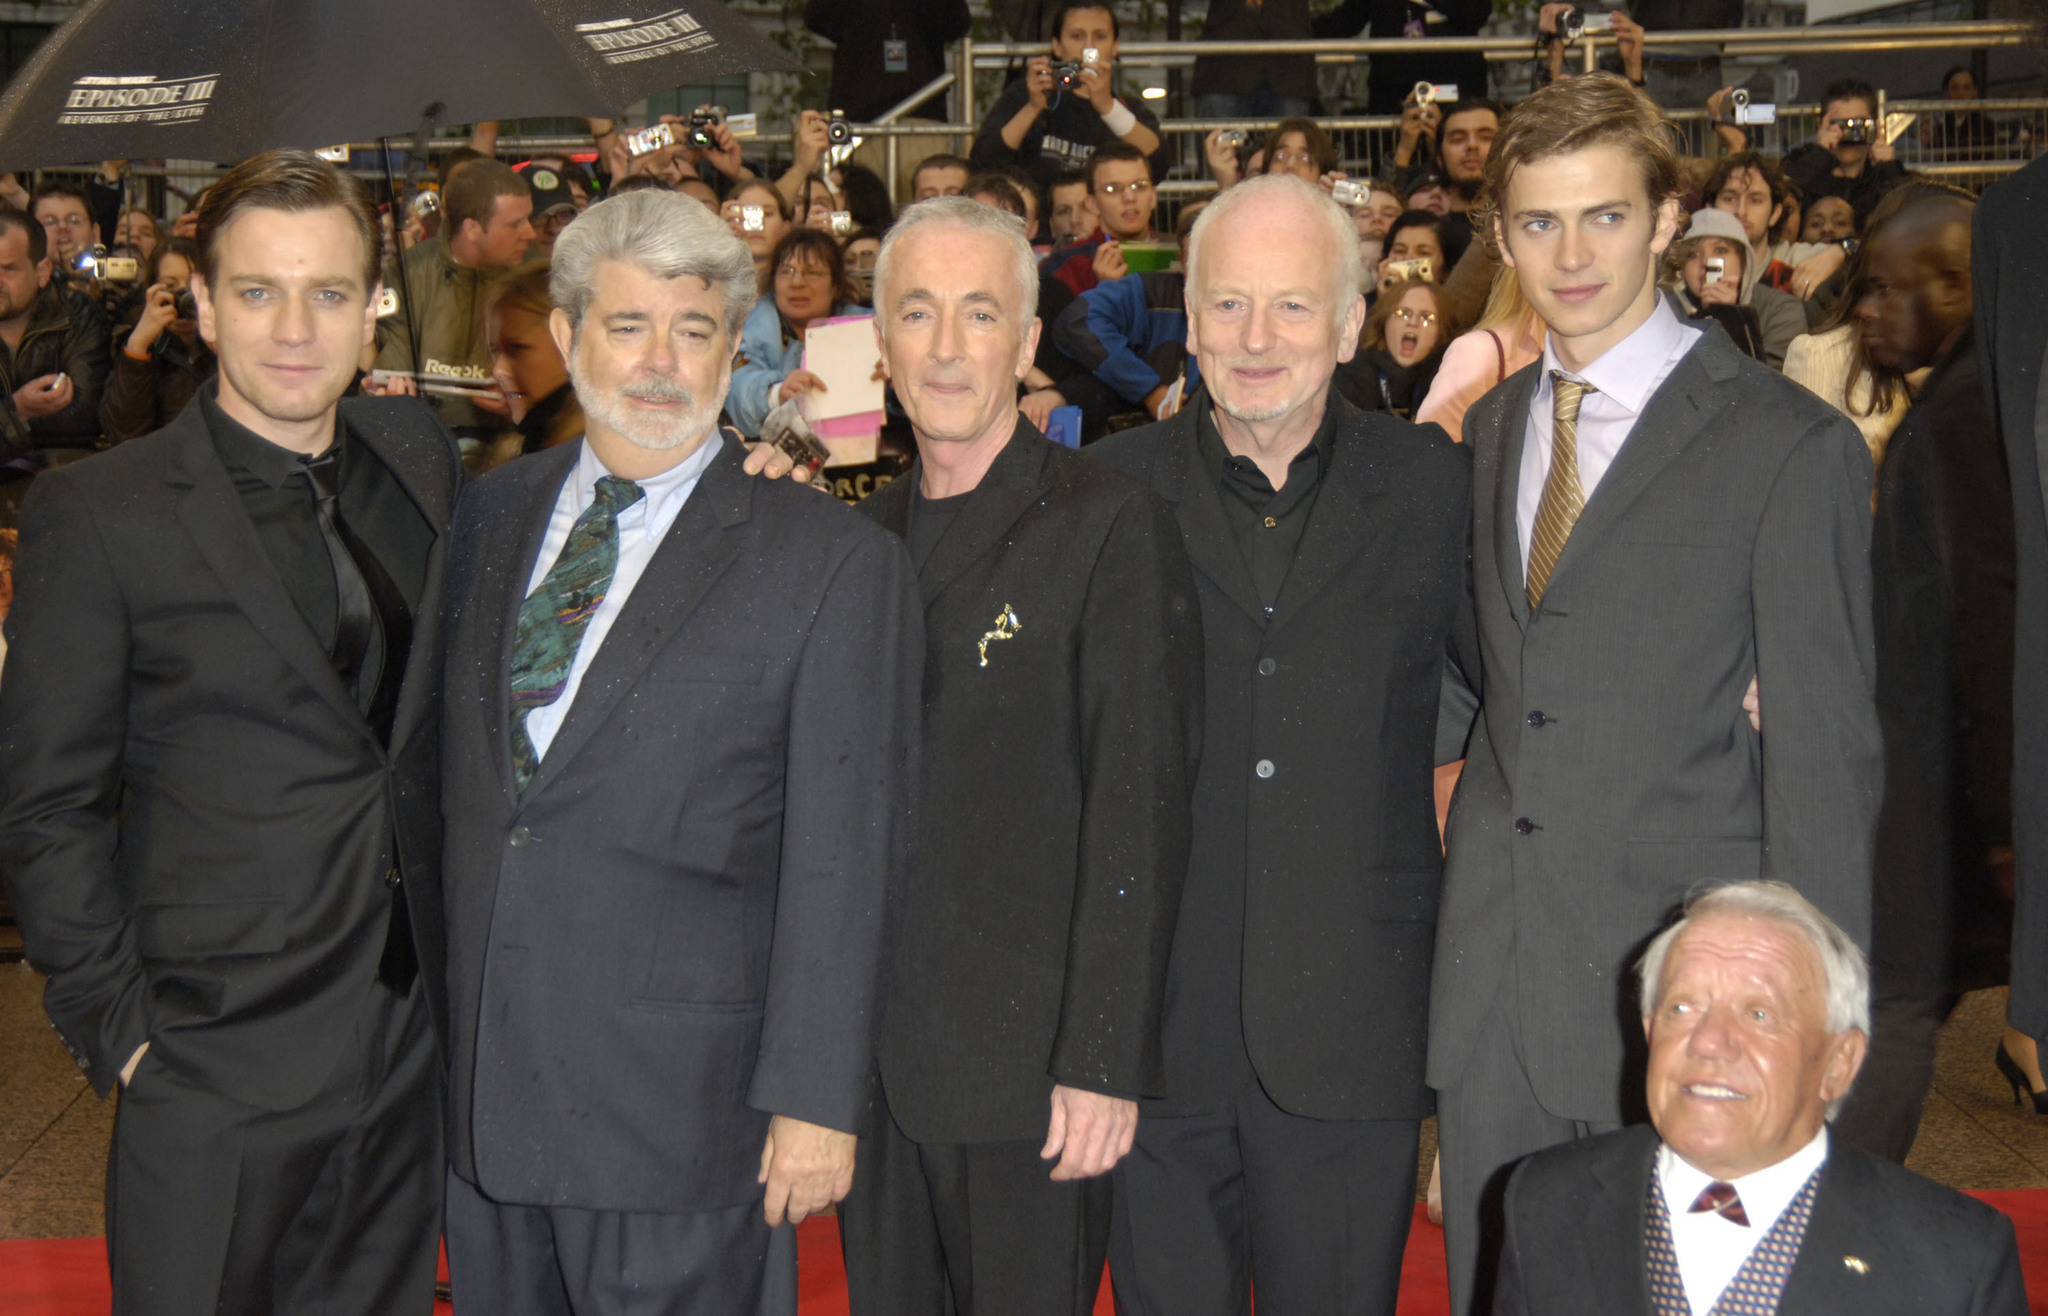 George Lucas, Ewan McGregor, Anthony Daniels, Ian McDiarmid, Kenny Baker and Hayden Christensen